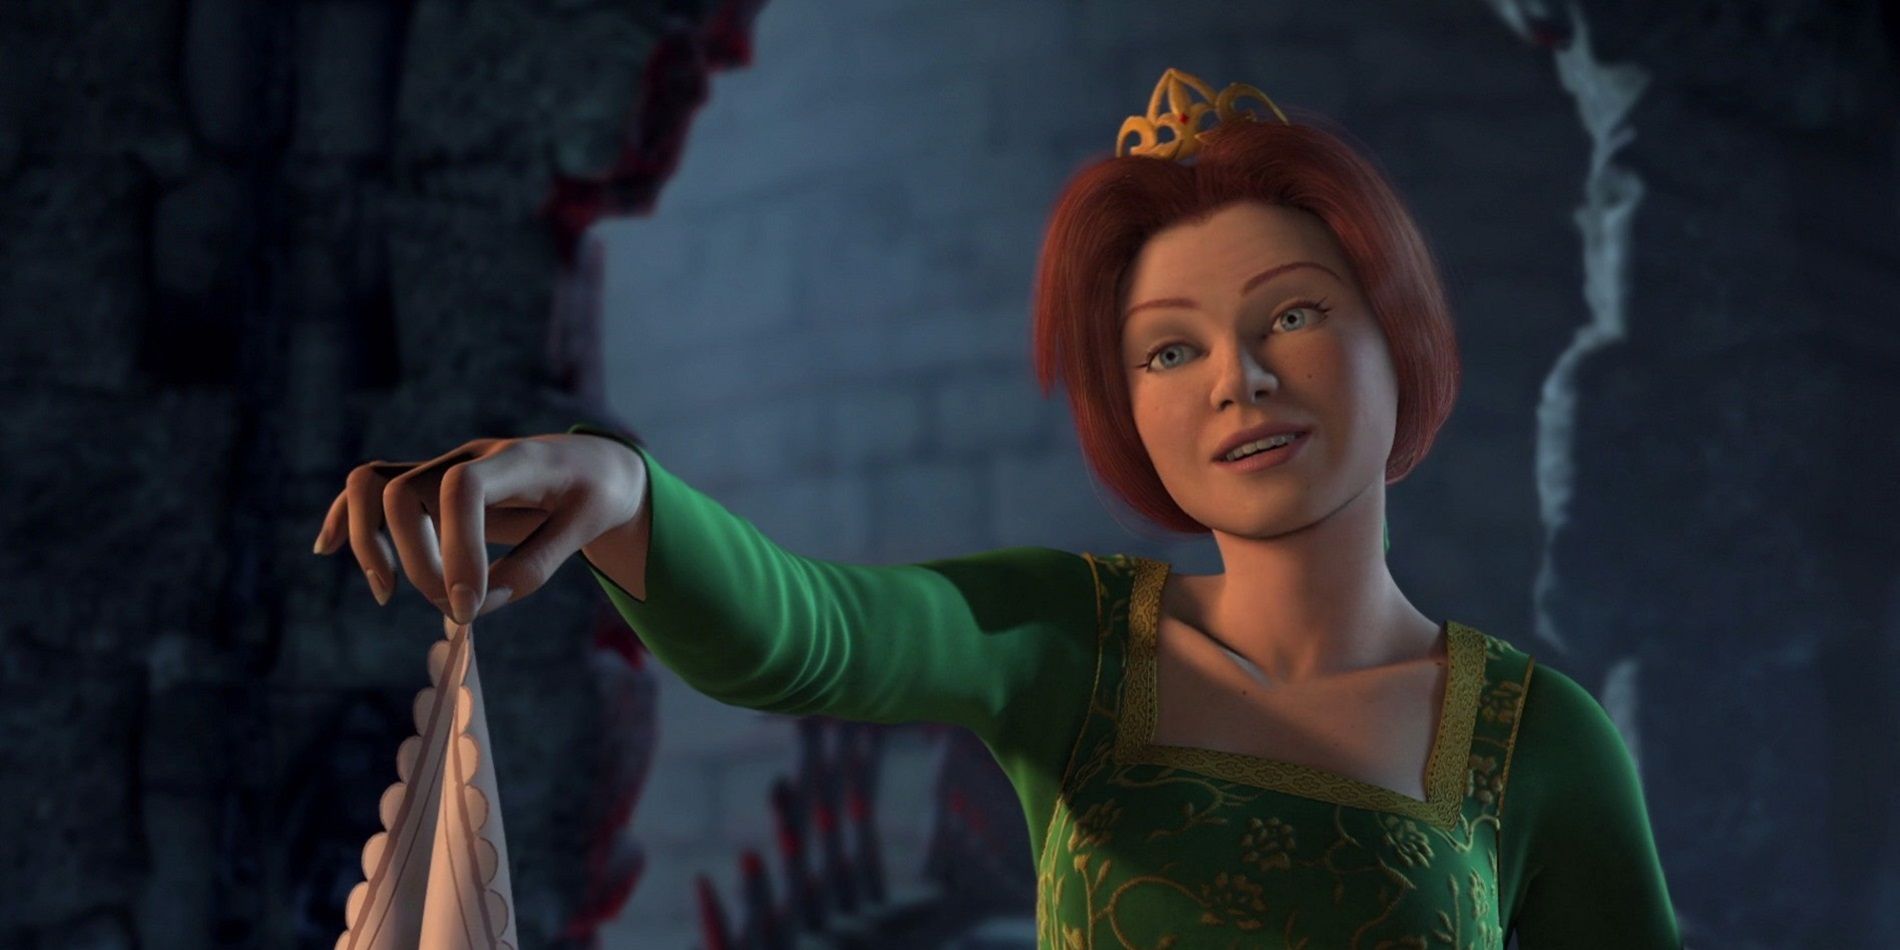 Princess Fiona giving her hankerchief to Shrek 